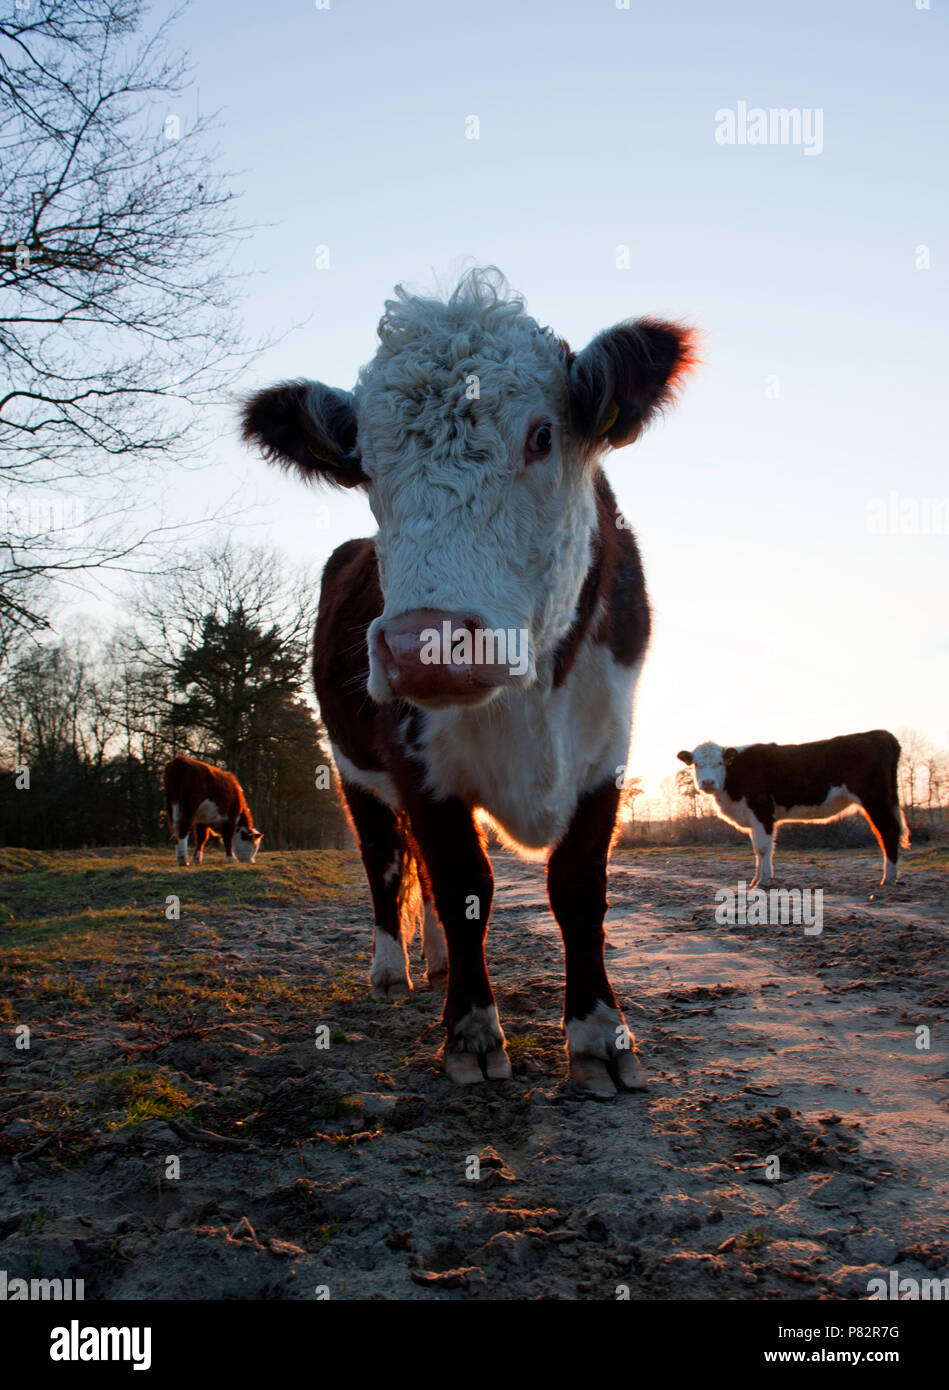 Herreforder rund; Herreford cow Stock Photo